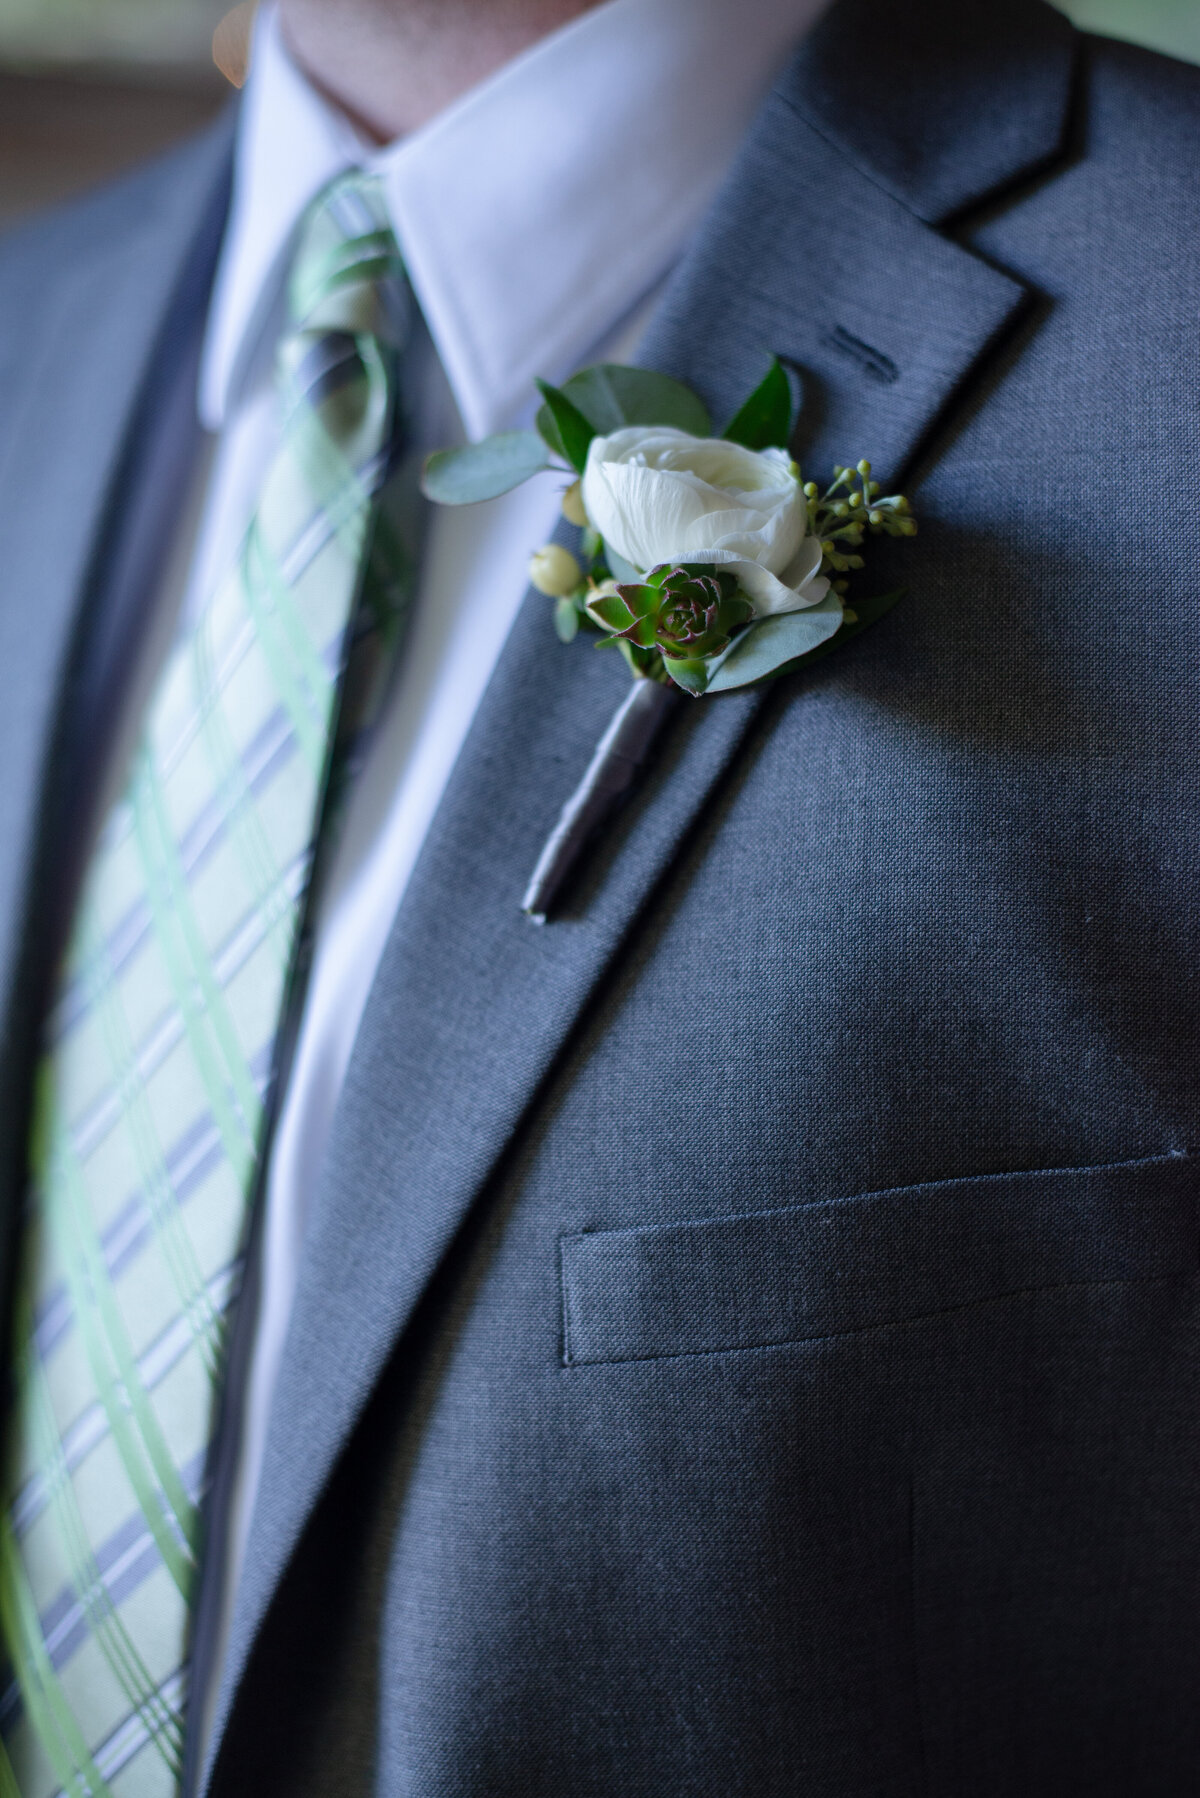 Wedding portrait of grooms details suit tie and boutonniere